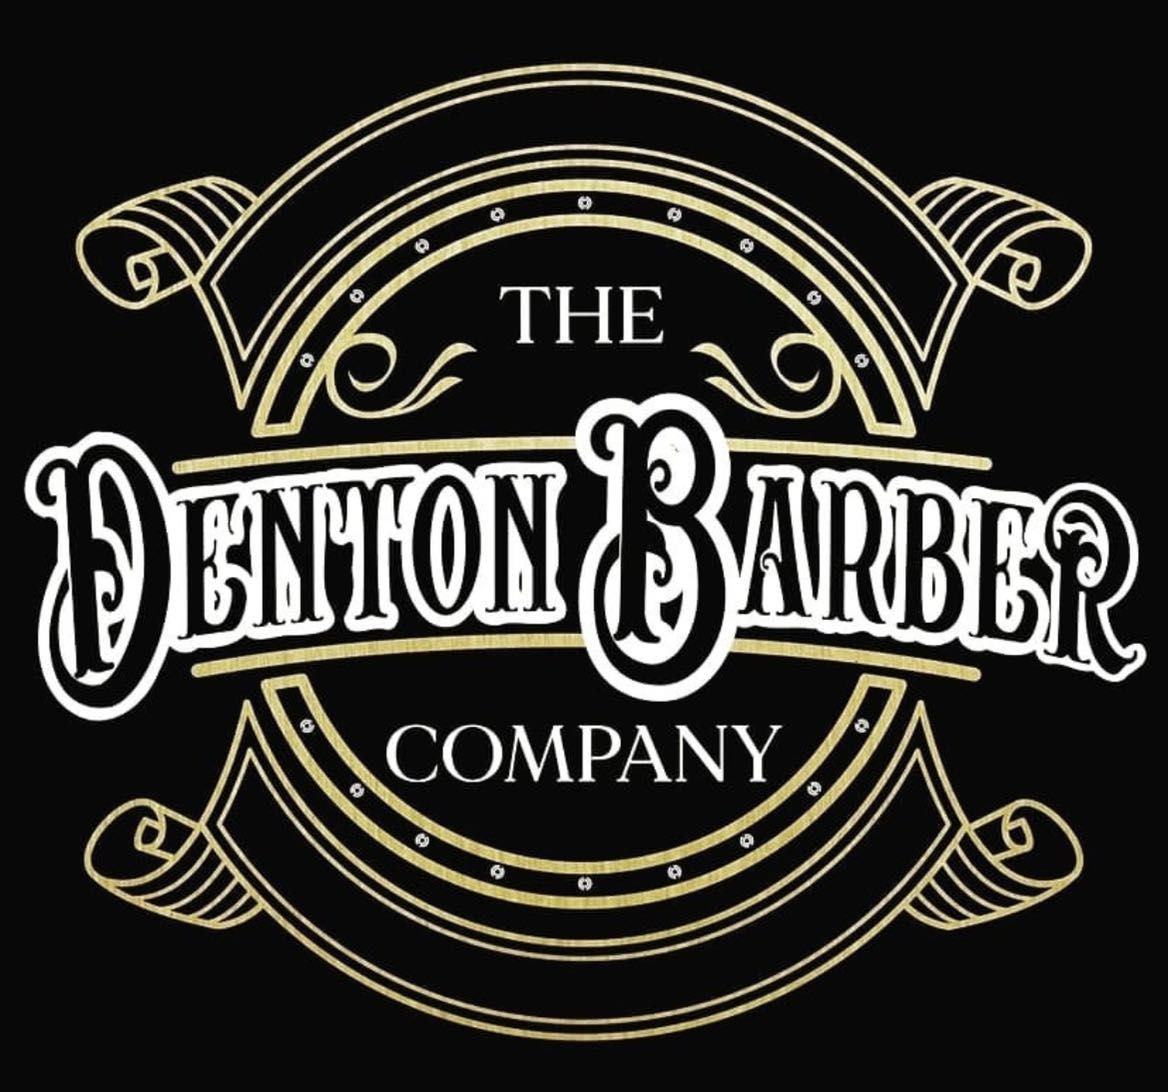 The Denton Barber Company, 517 S Locust at, Denton, 76201